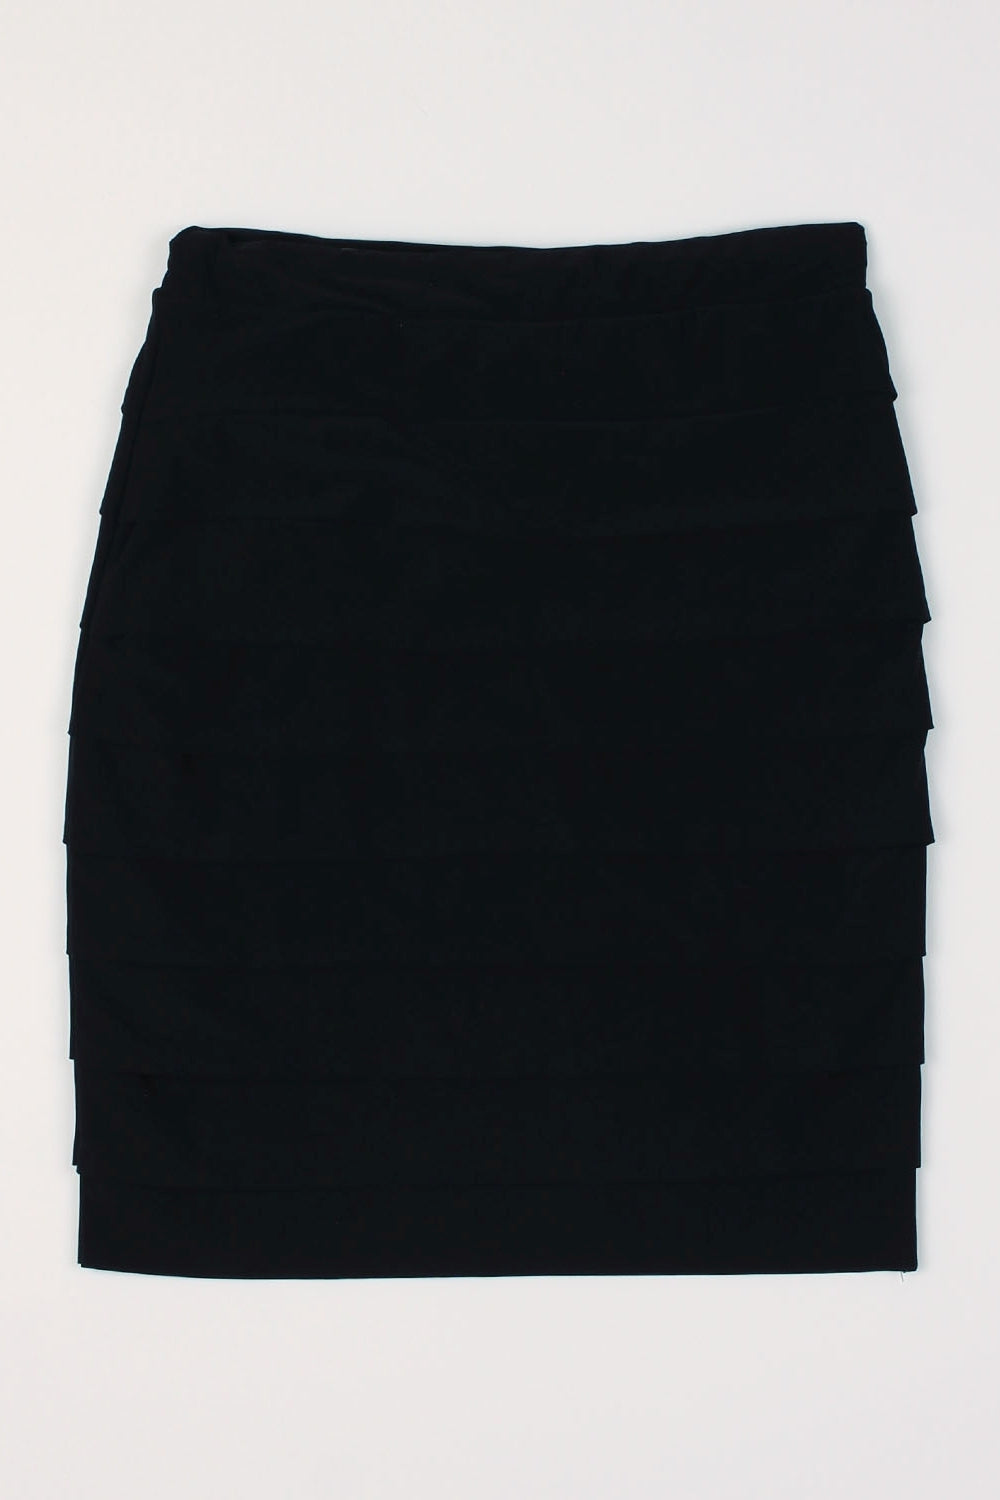 Diana Ferrari Black Layered Skirt 8